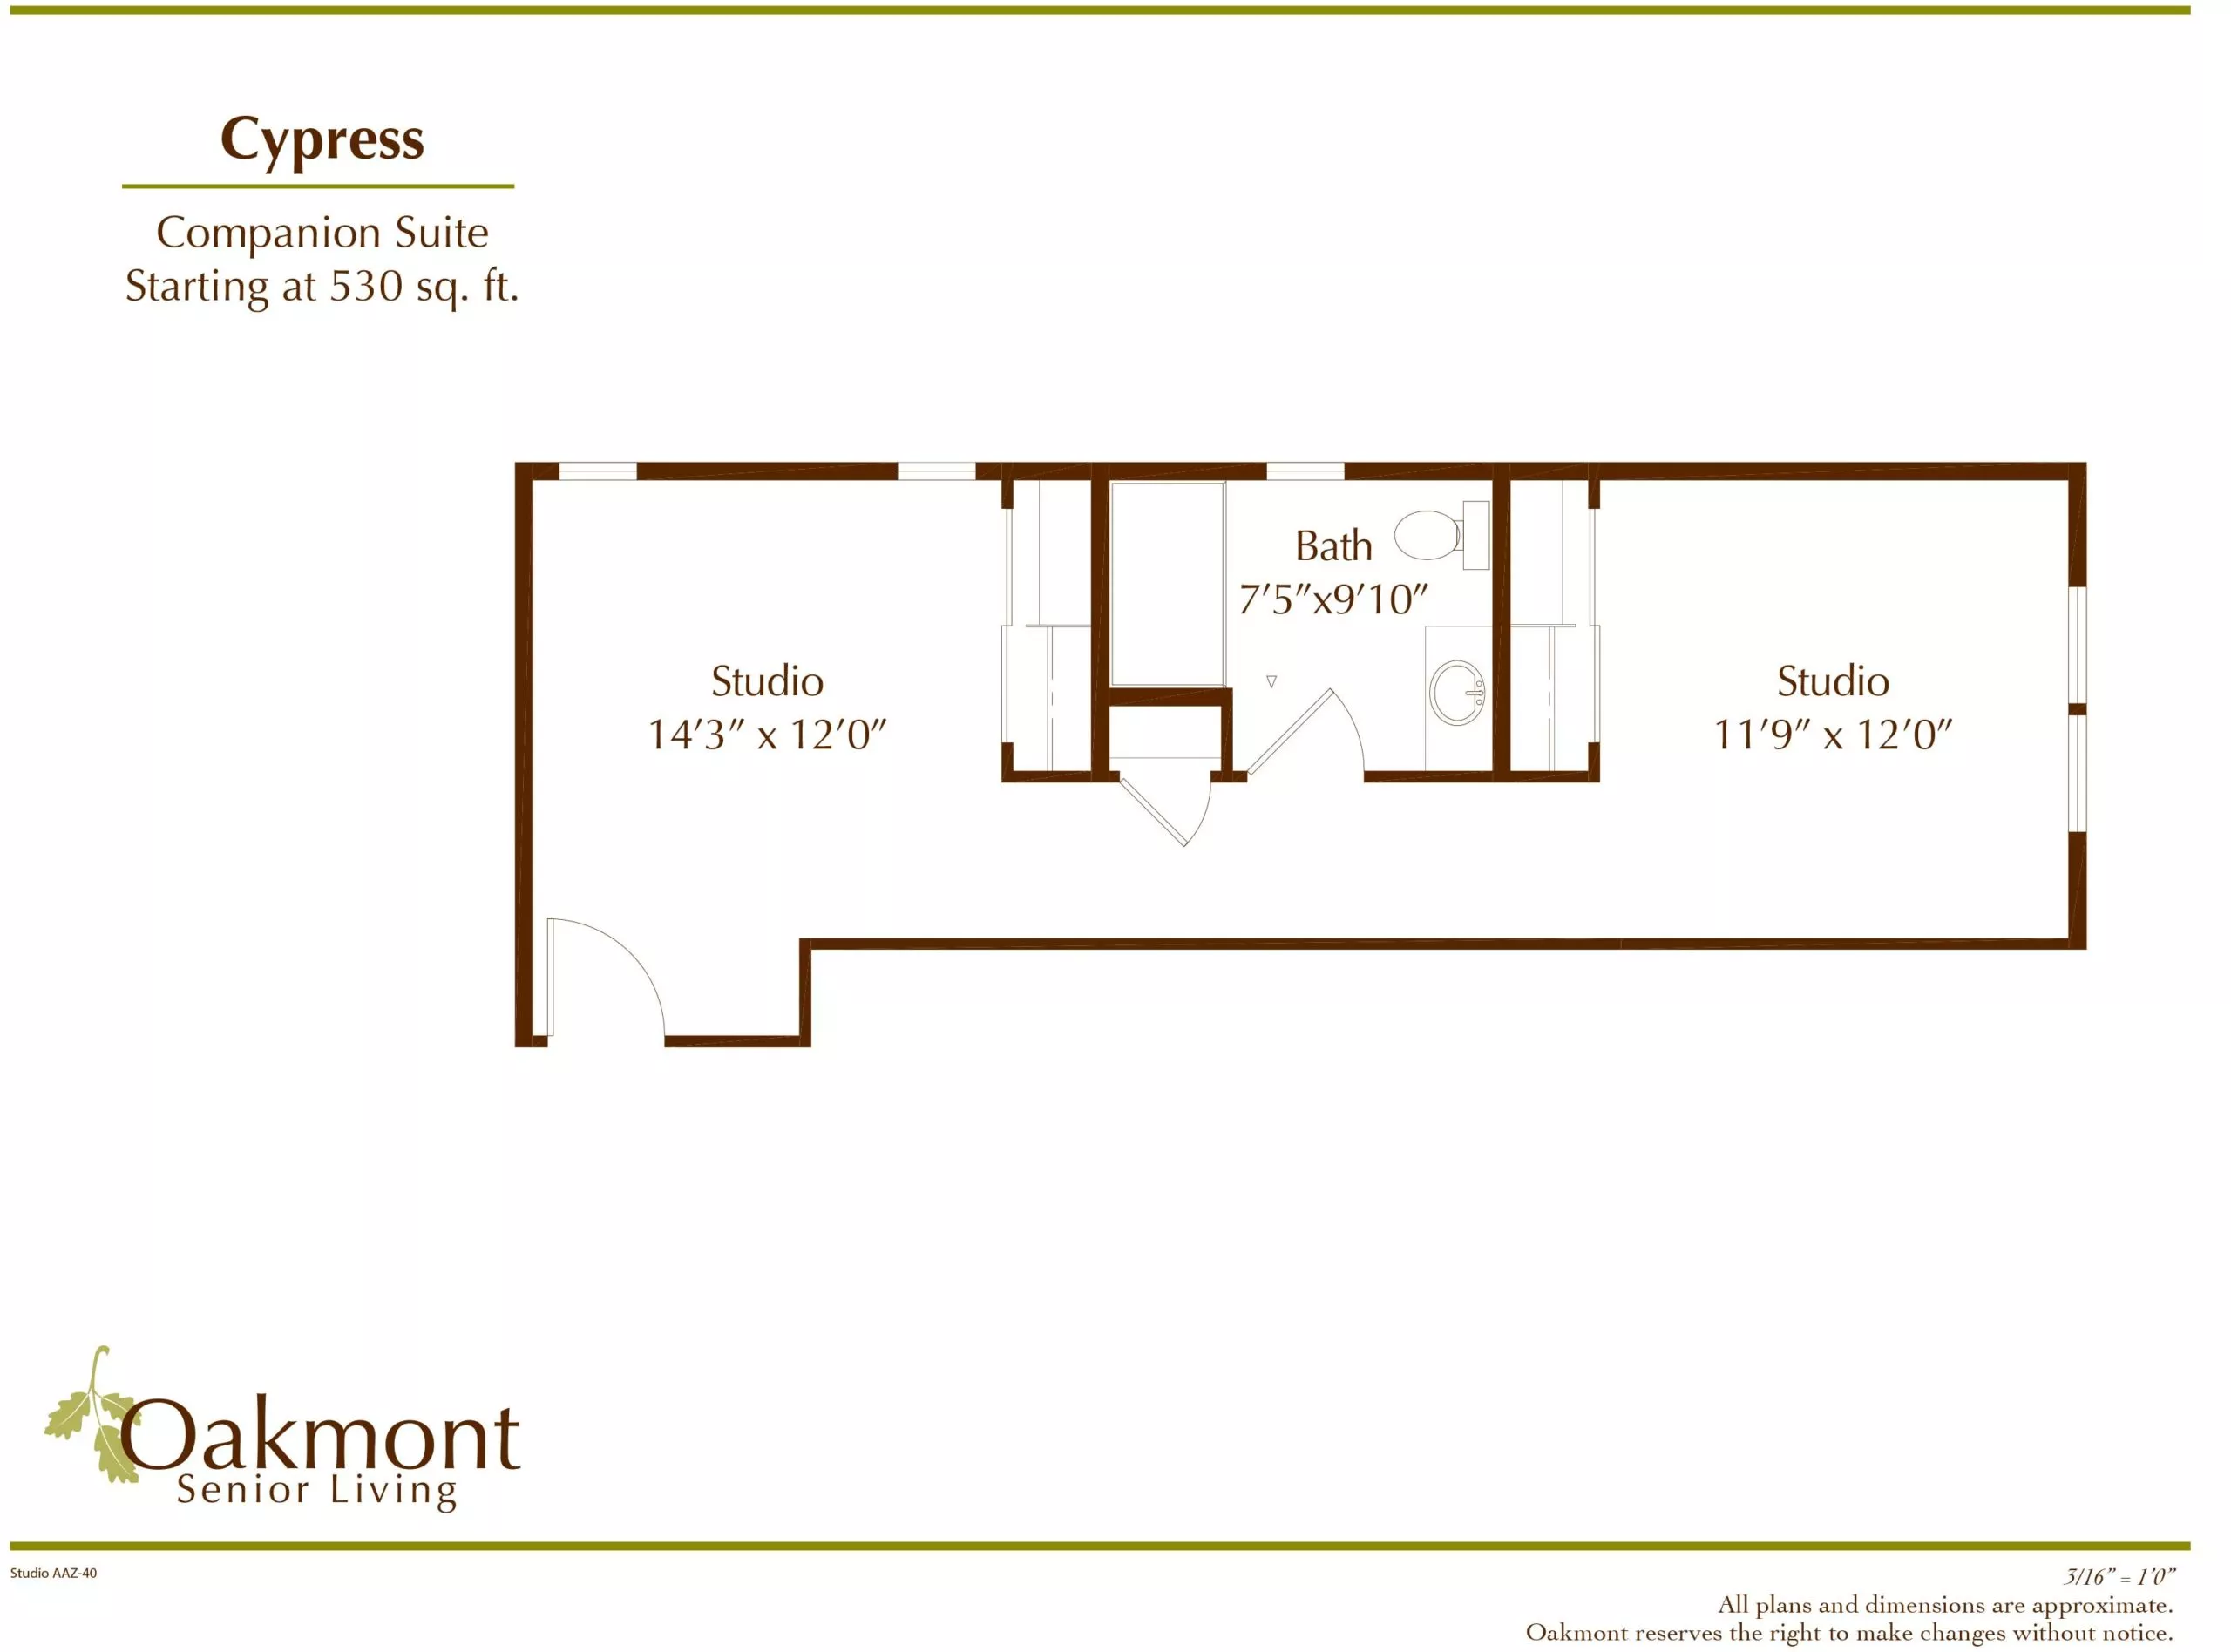 Cypress Companion Suite floor plan